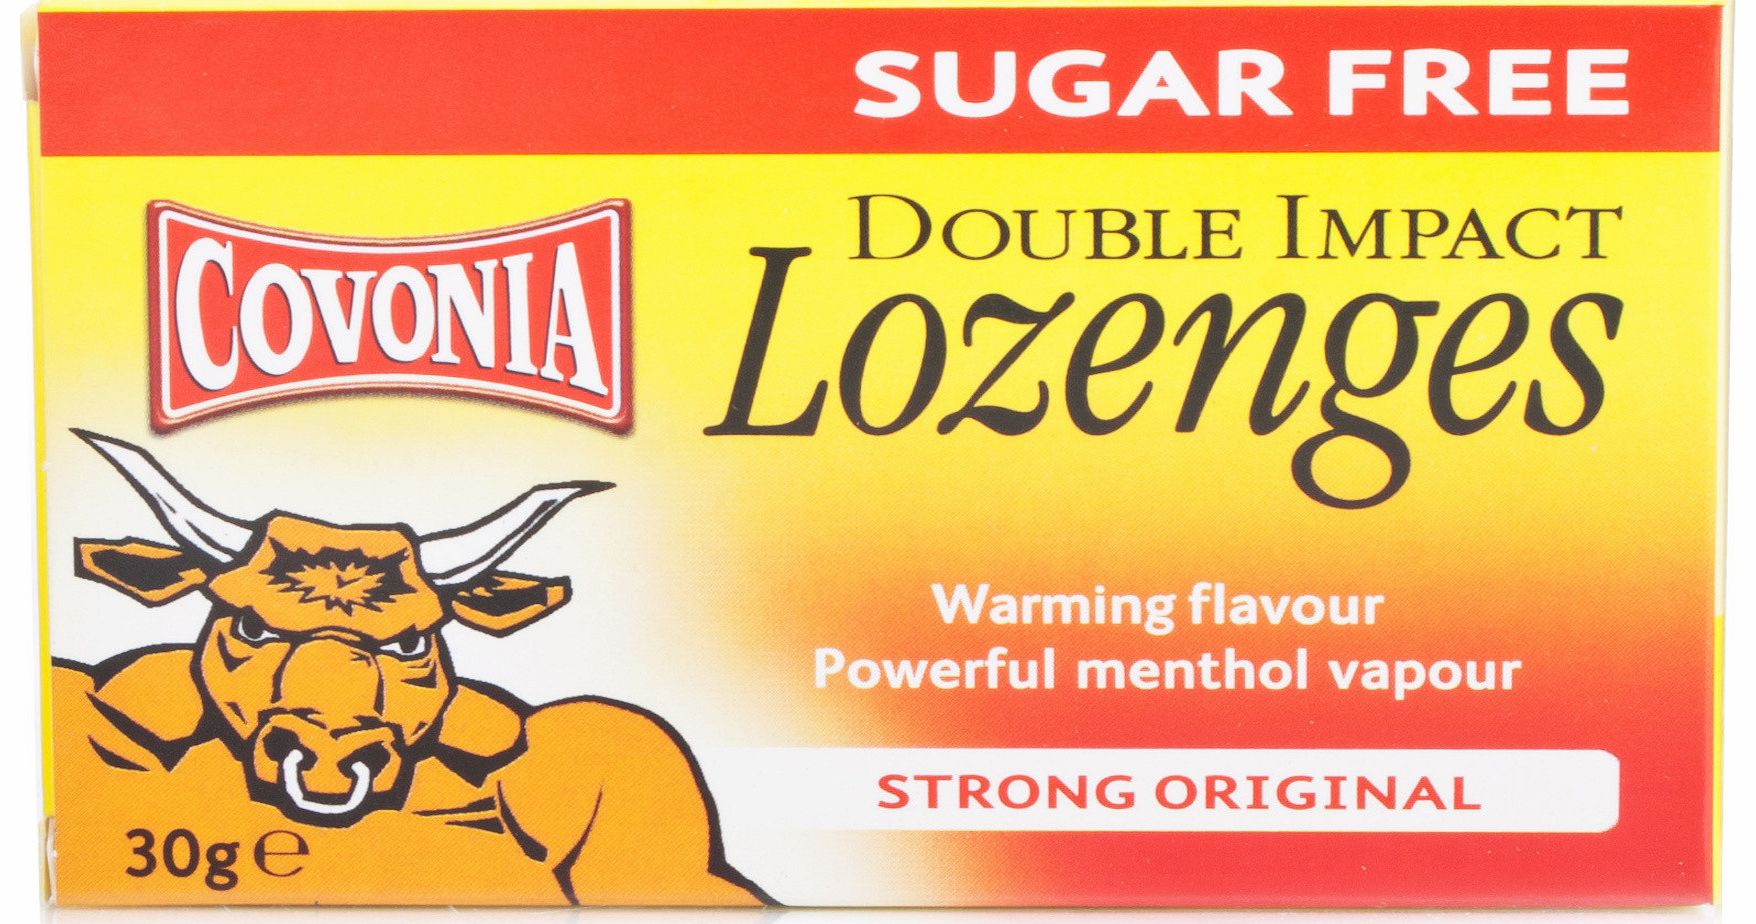 Sugar Free Double Impact Lozenges Original